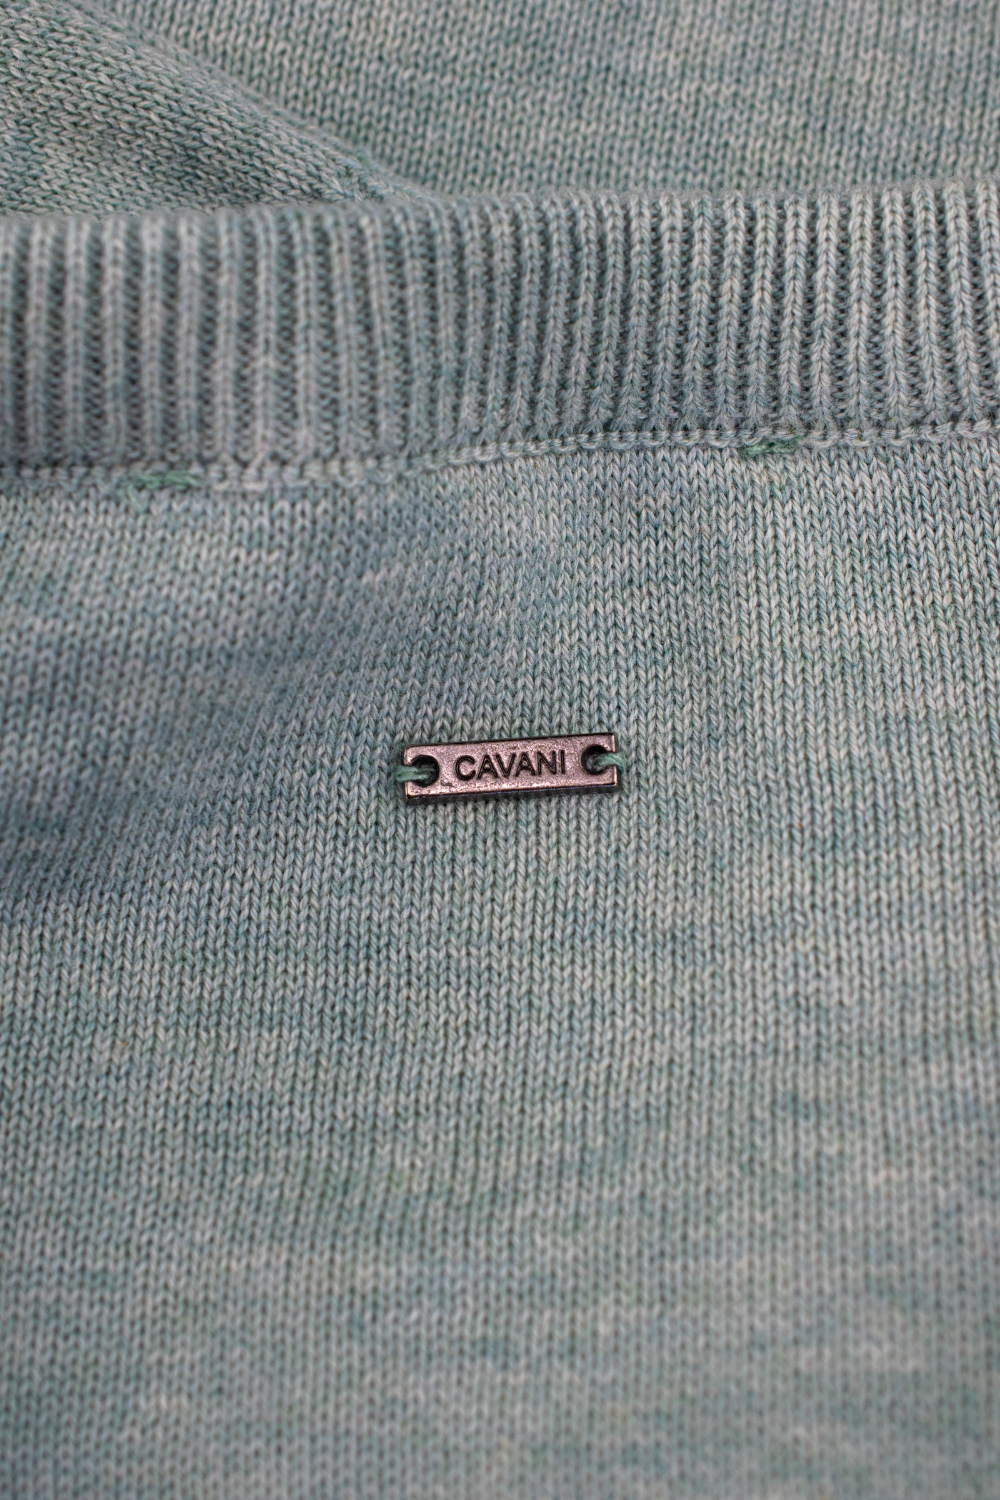 Cavani Crewneck Knit in Almond @ www.millscountrystore.com